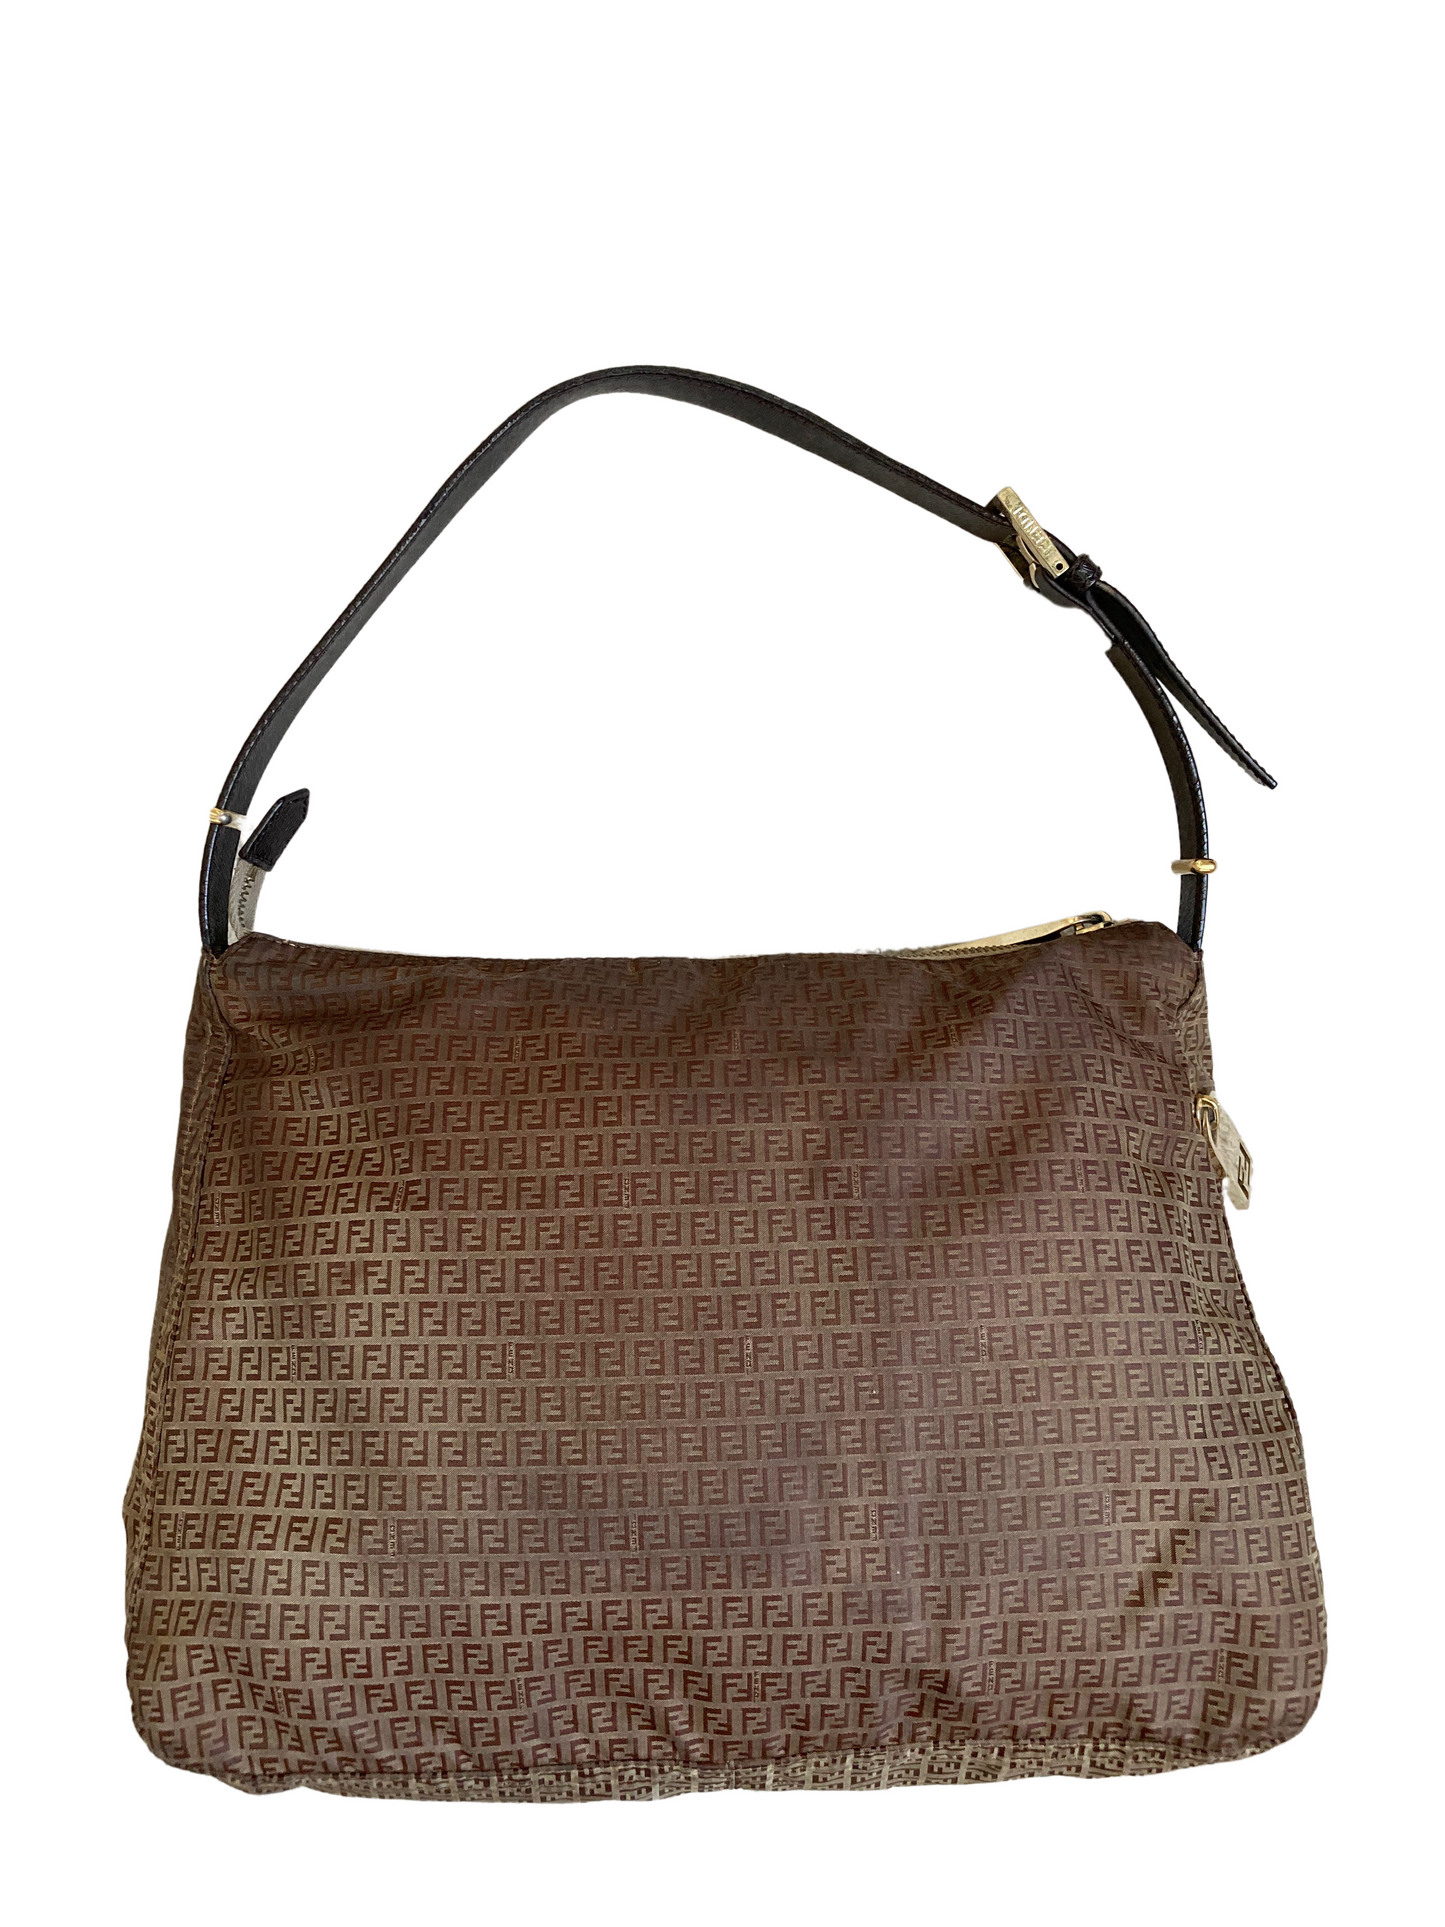 Fendi Light Brown Nylon Shoulder Bag